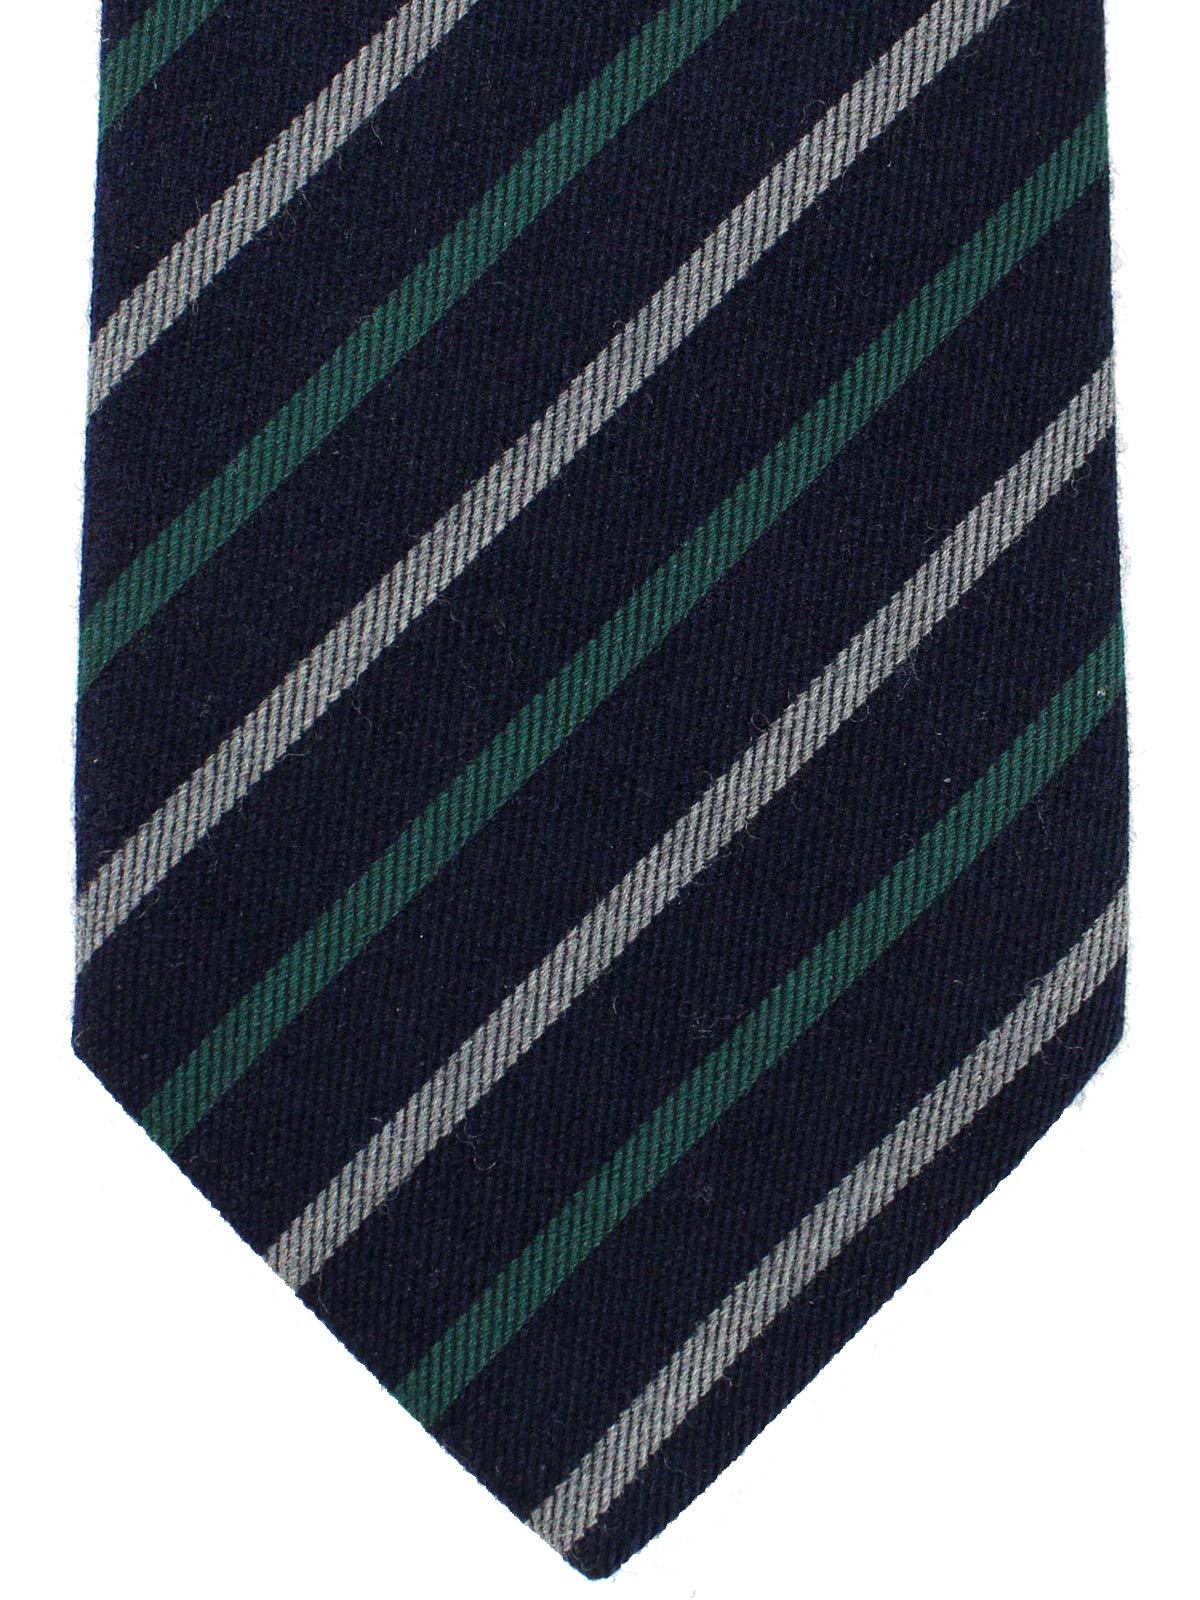 Borrelli Necktie Navy Gray Green Stripes Wool Tie